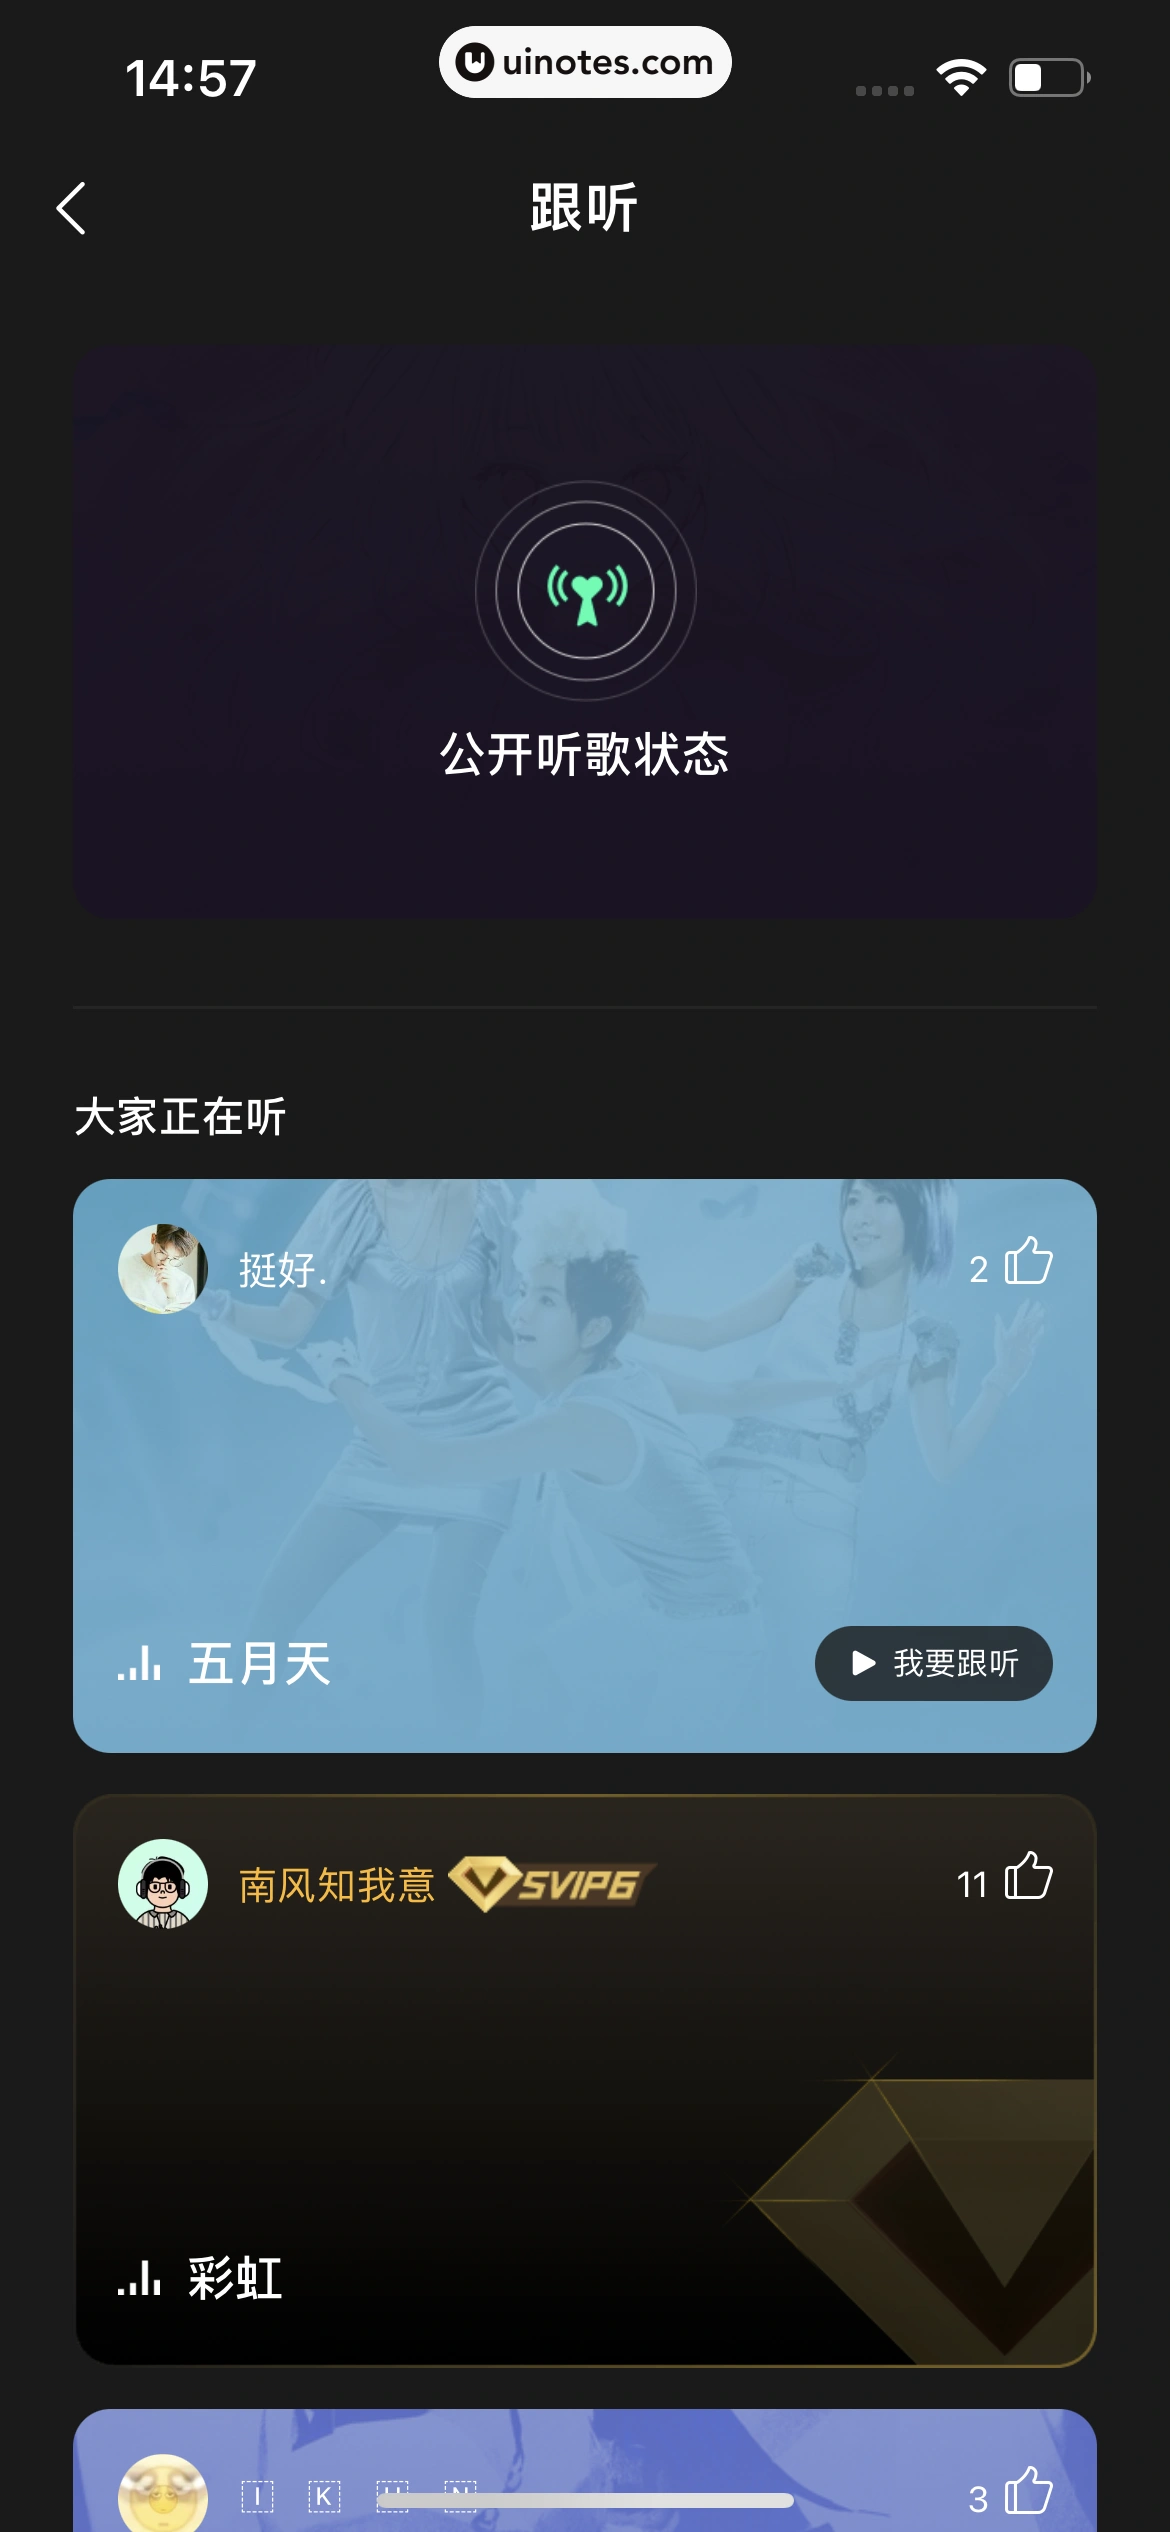 QQ音乐 App 截图 243 - UI Notes